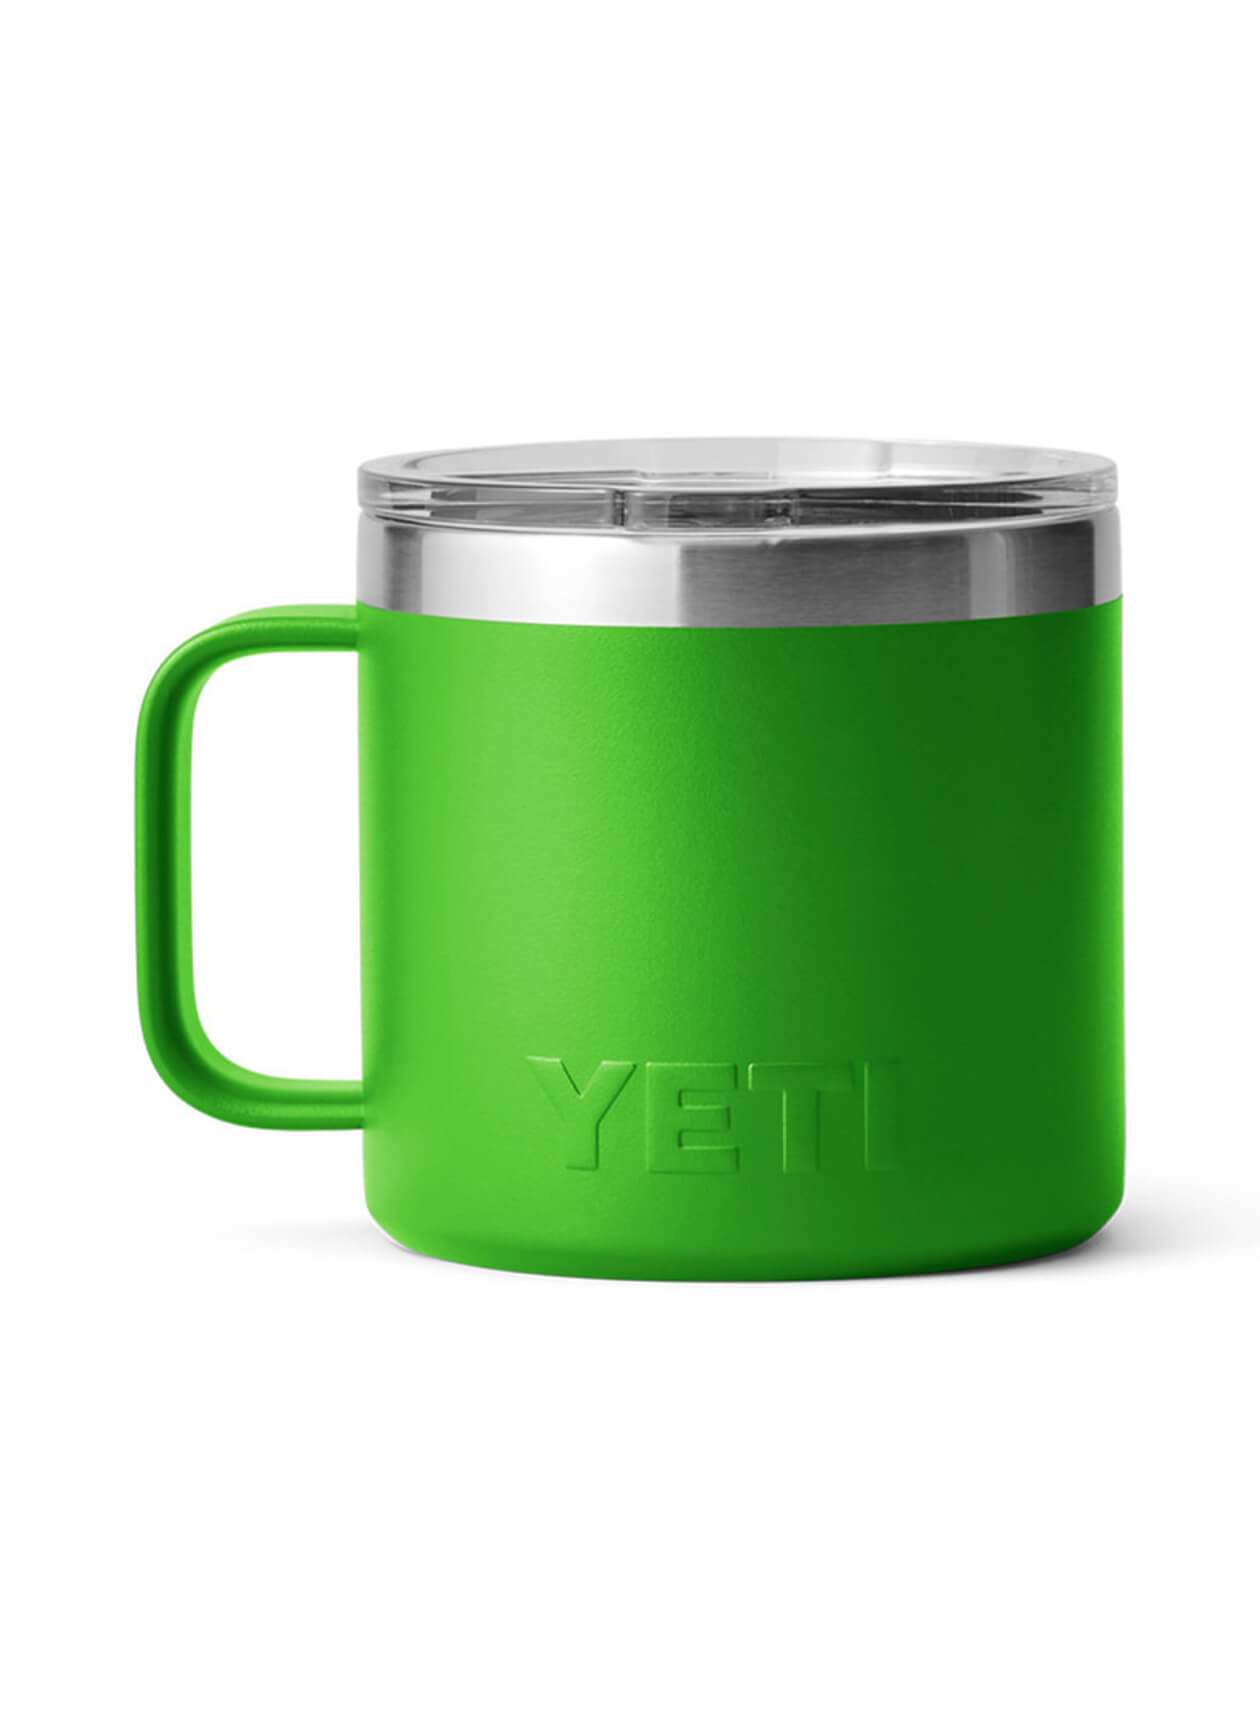 Canopy Green Yeti Rambler 14 oz Mug with Lid NEW SPRING COLOR